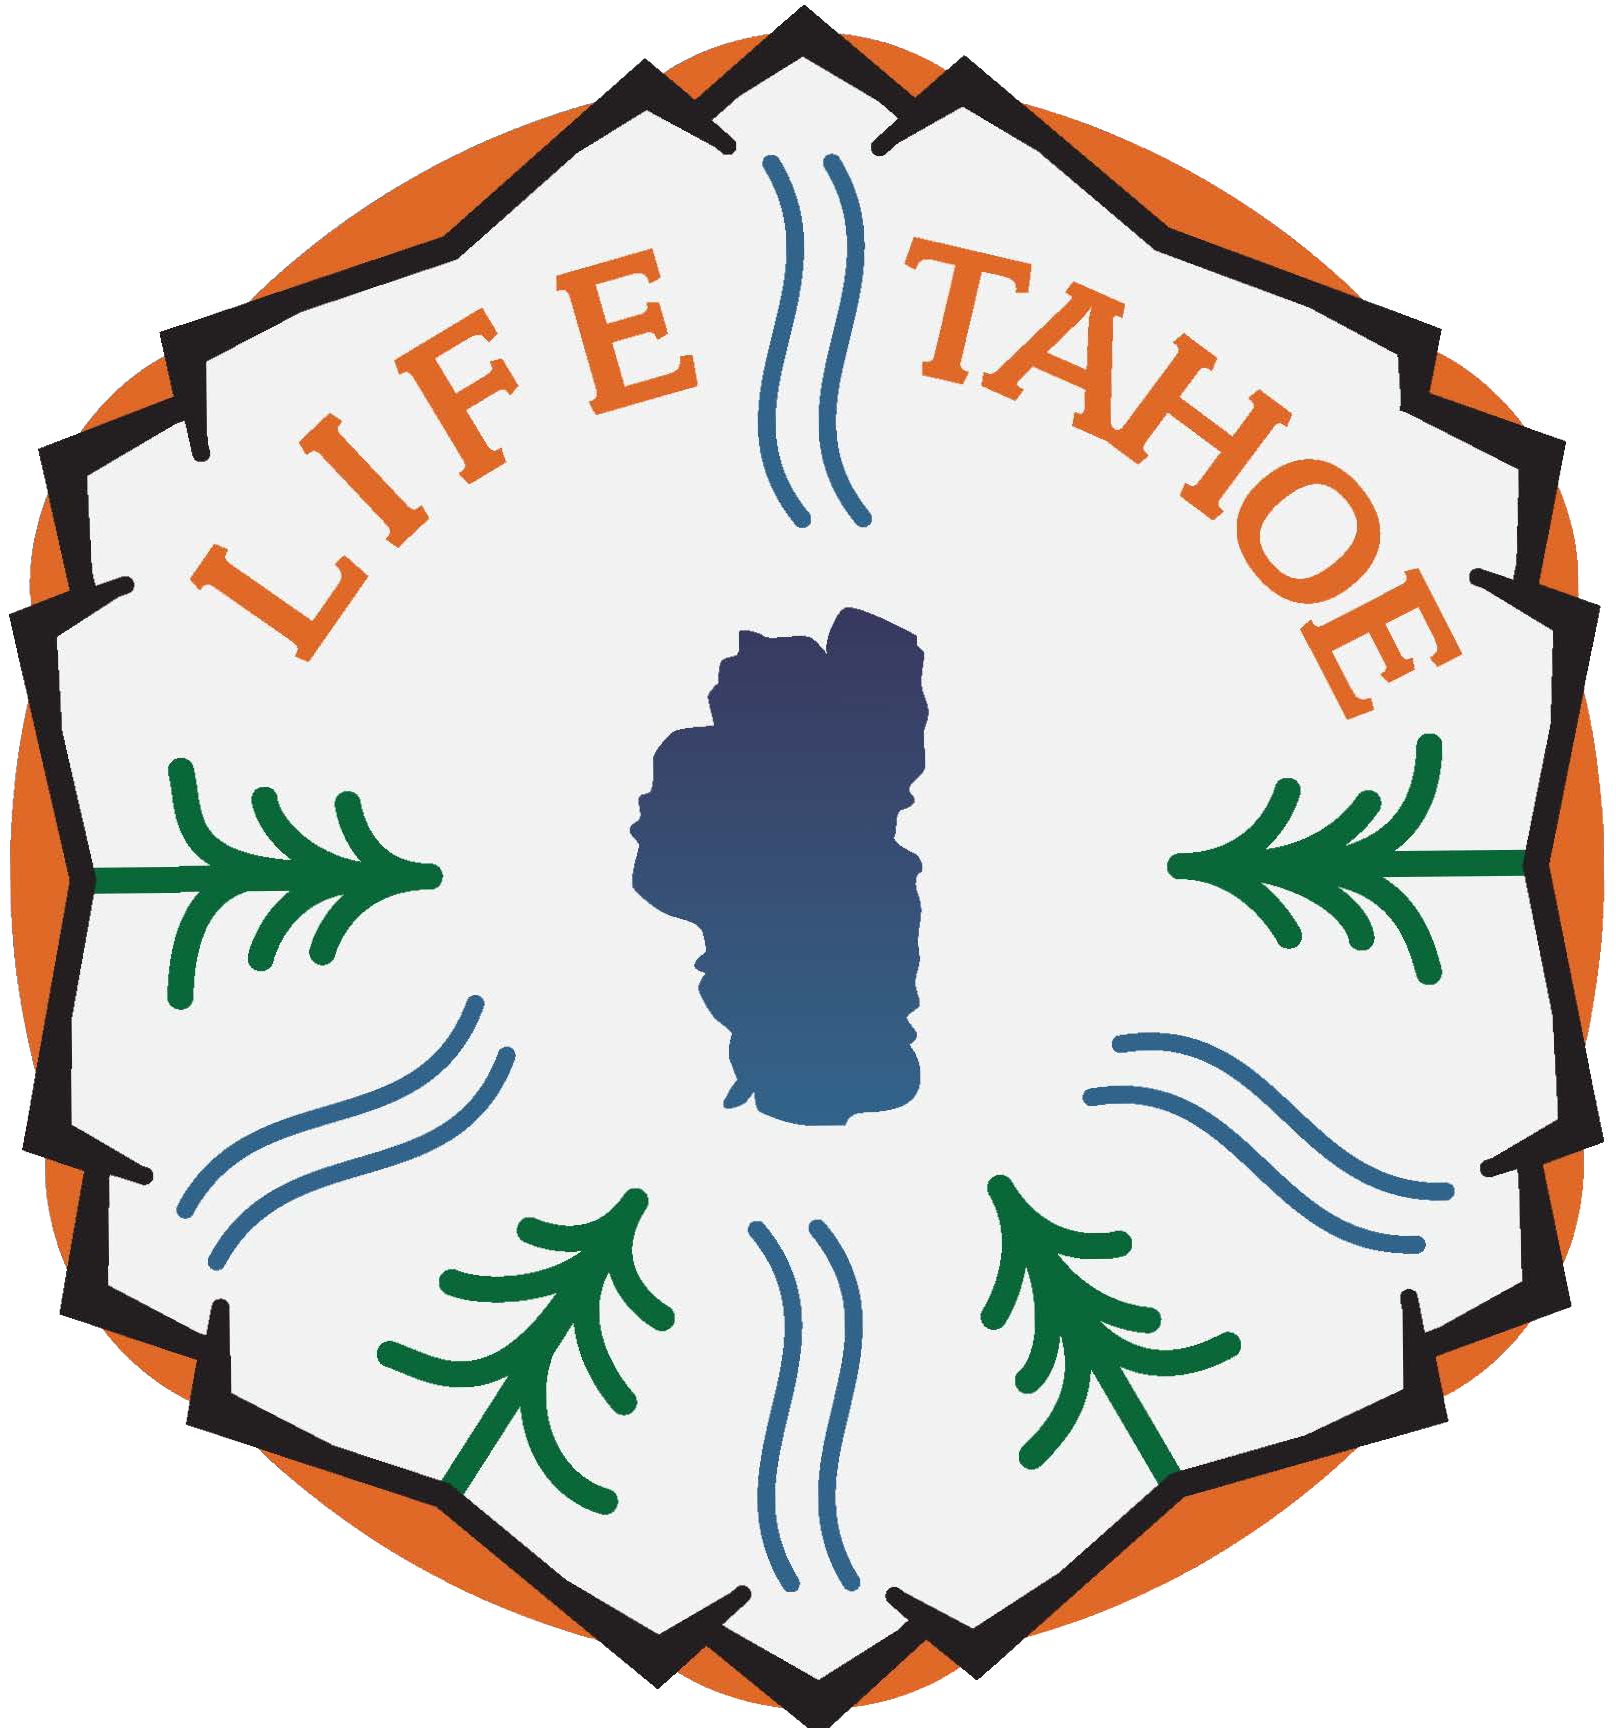 Life Tahoe